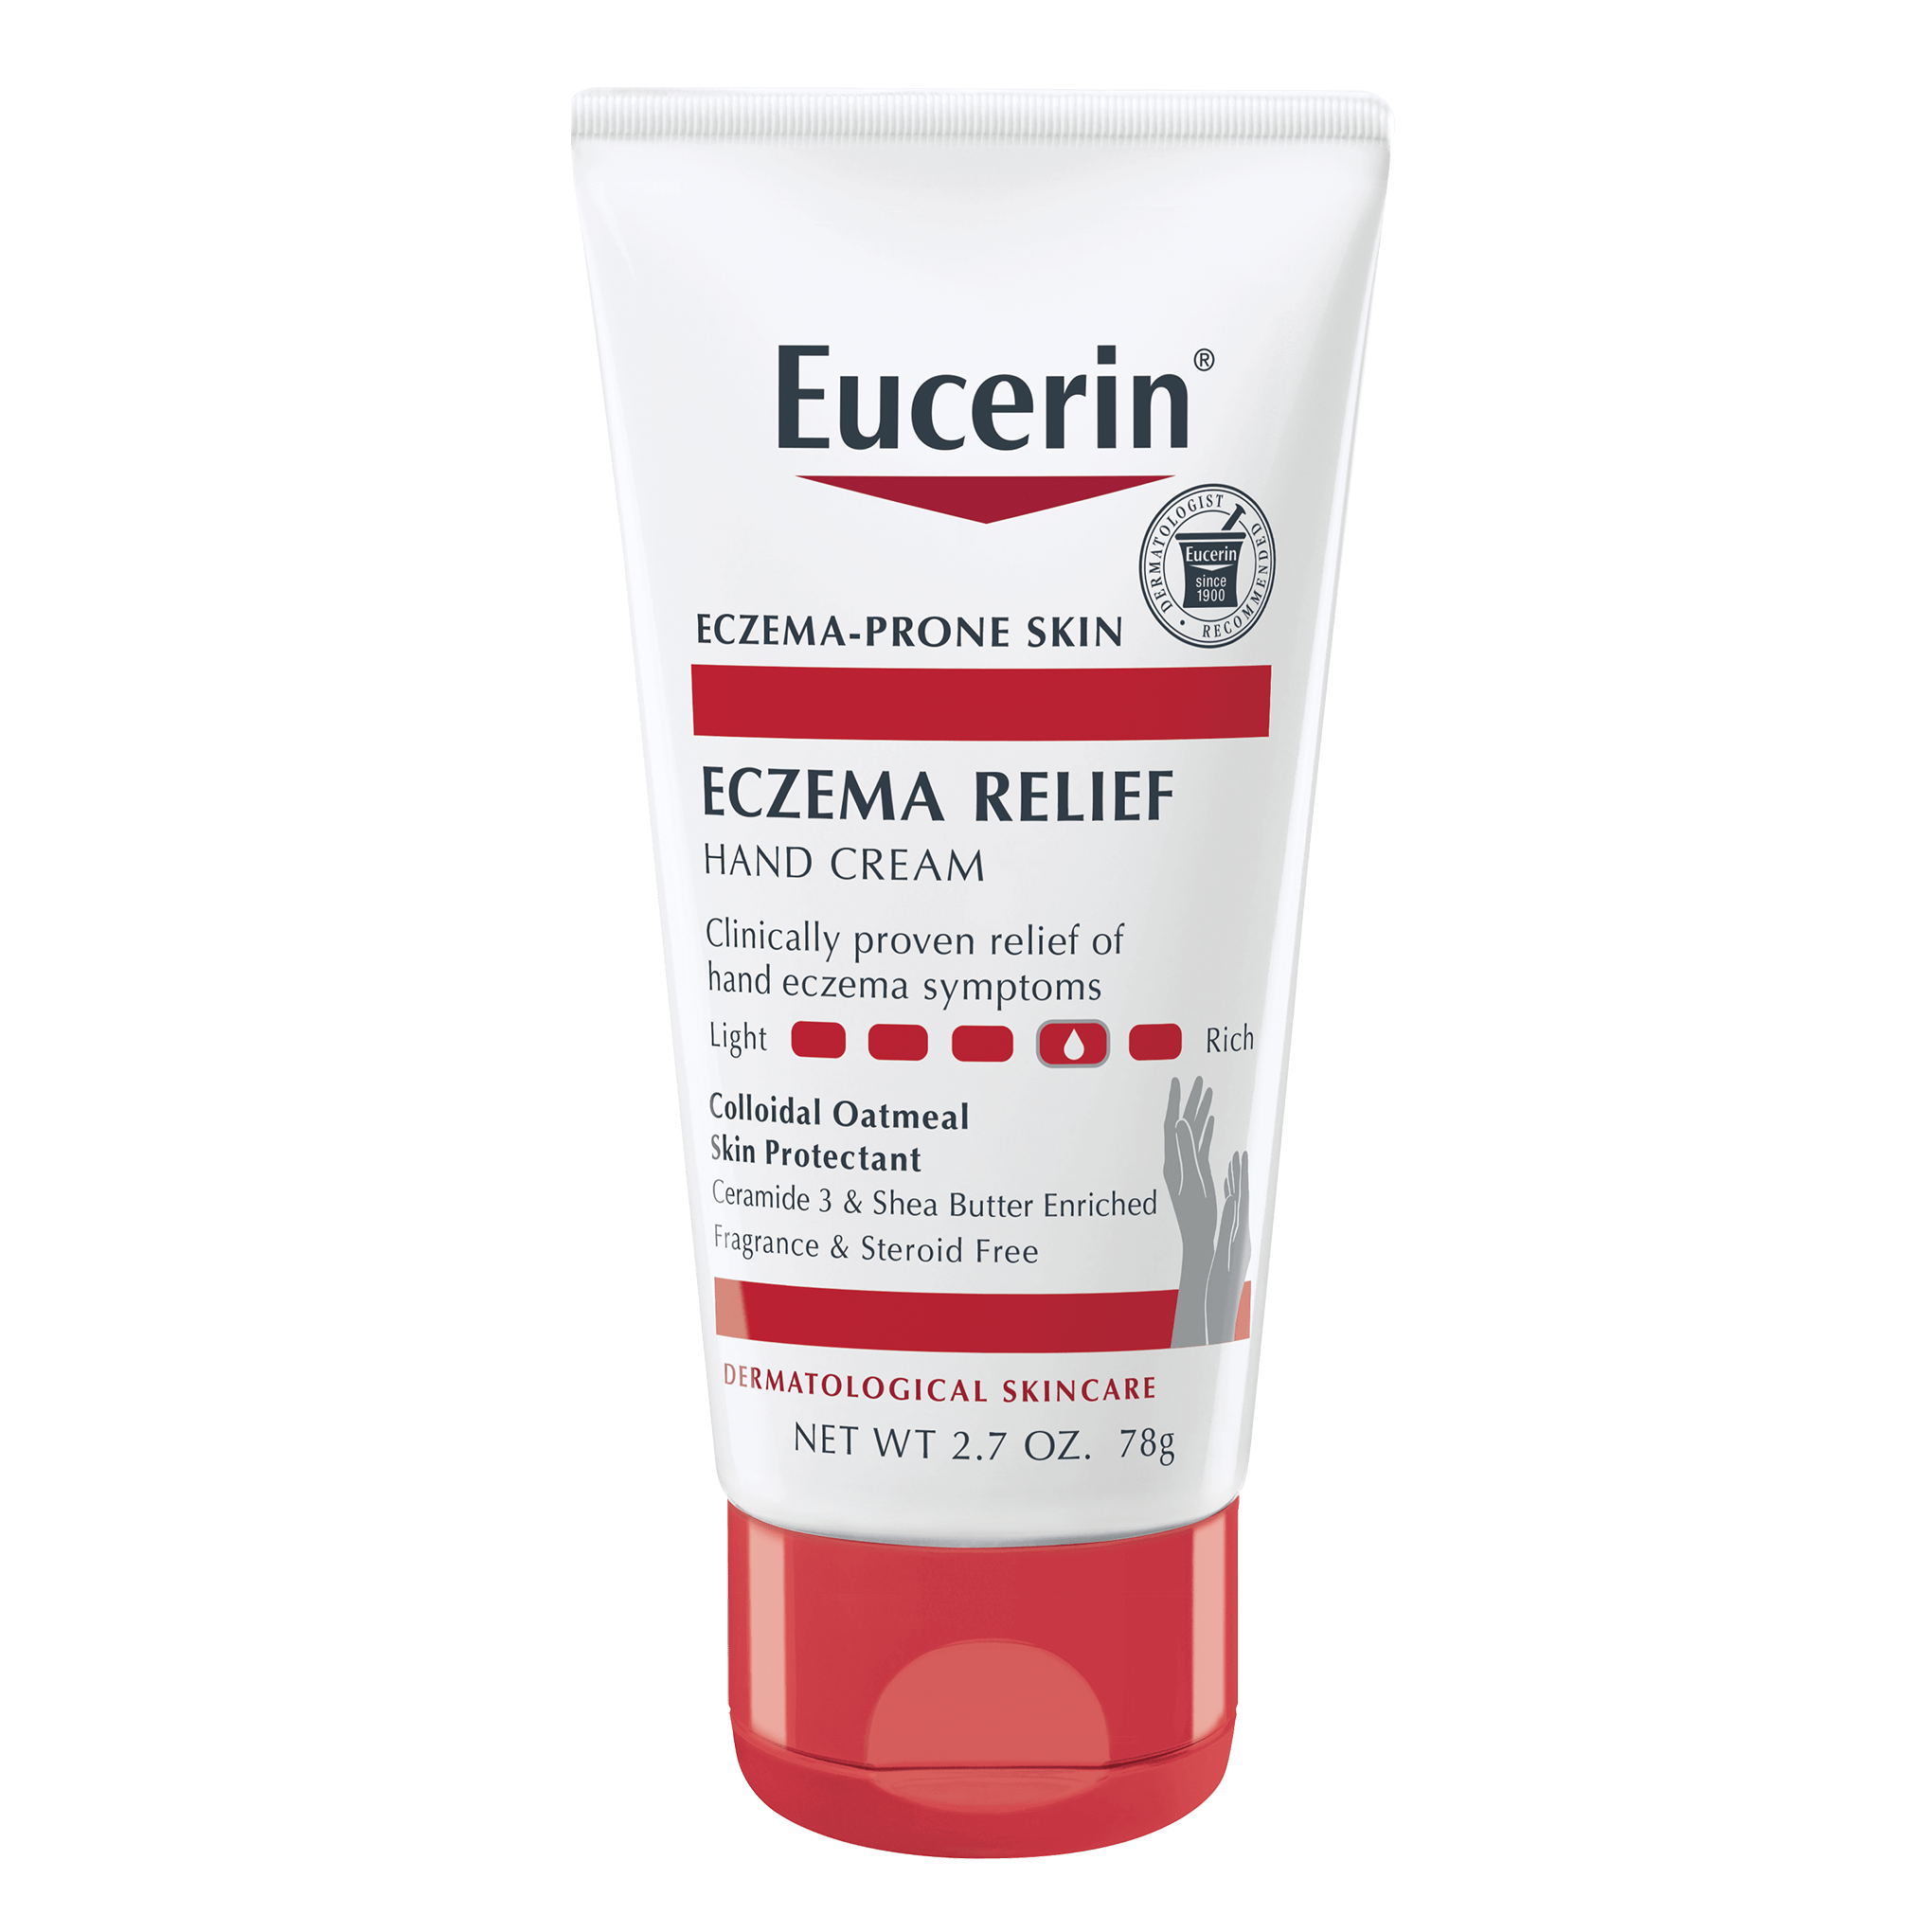 Eczema Hand Cream, Eczema-prone Skin - 2.7 oz Tube